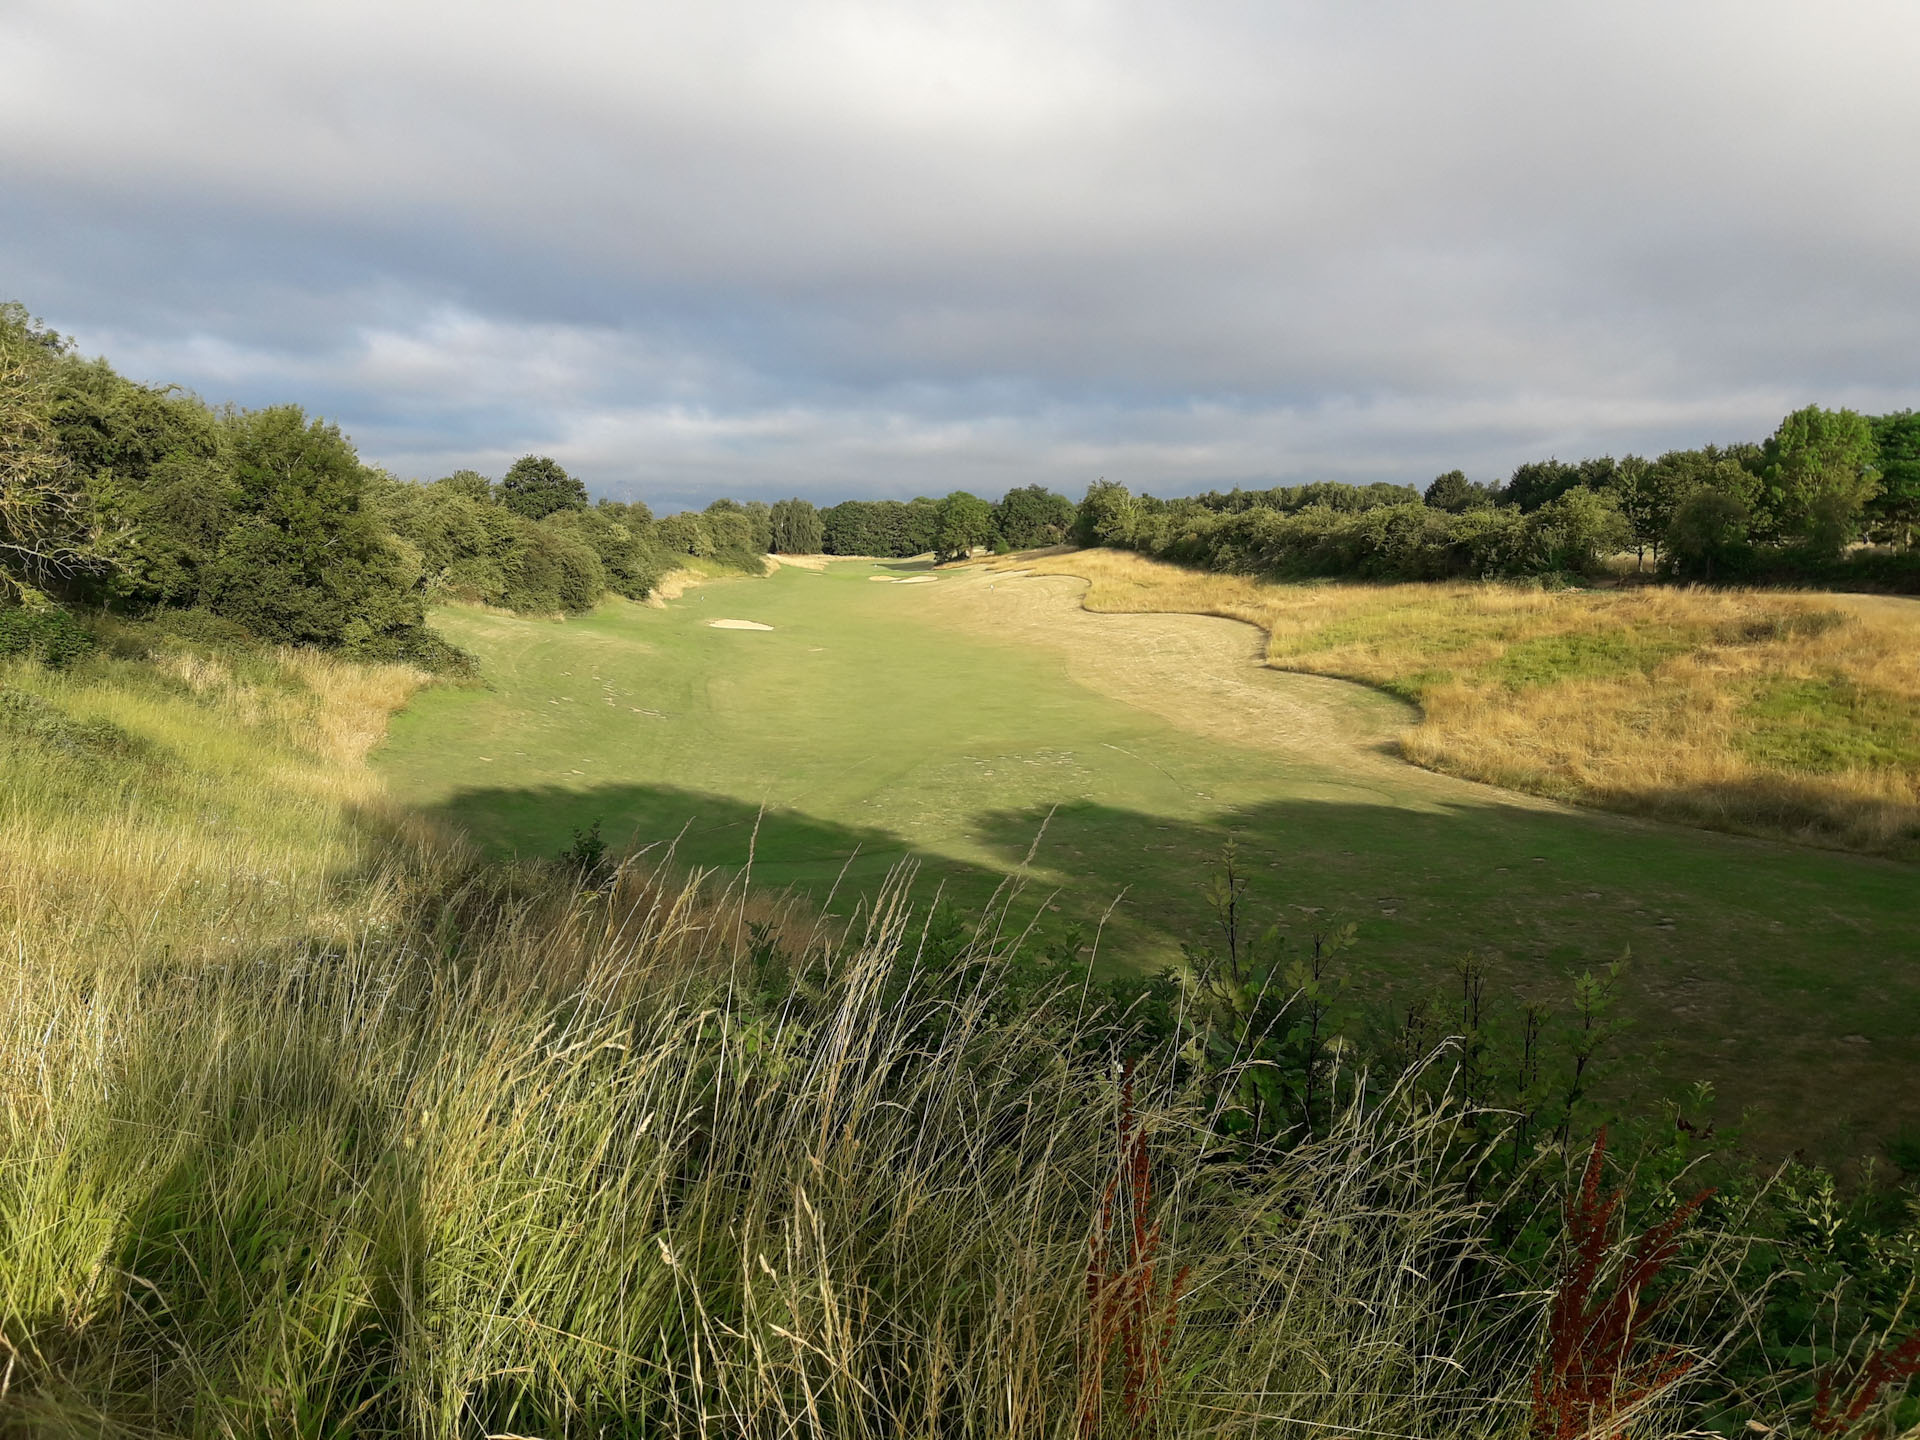 Head down the fairway at Caen golf club, in Normandy, France